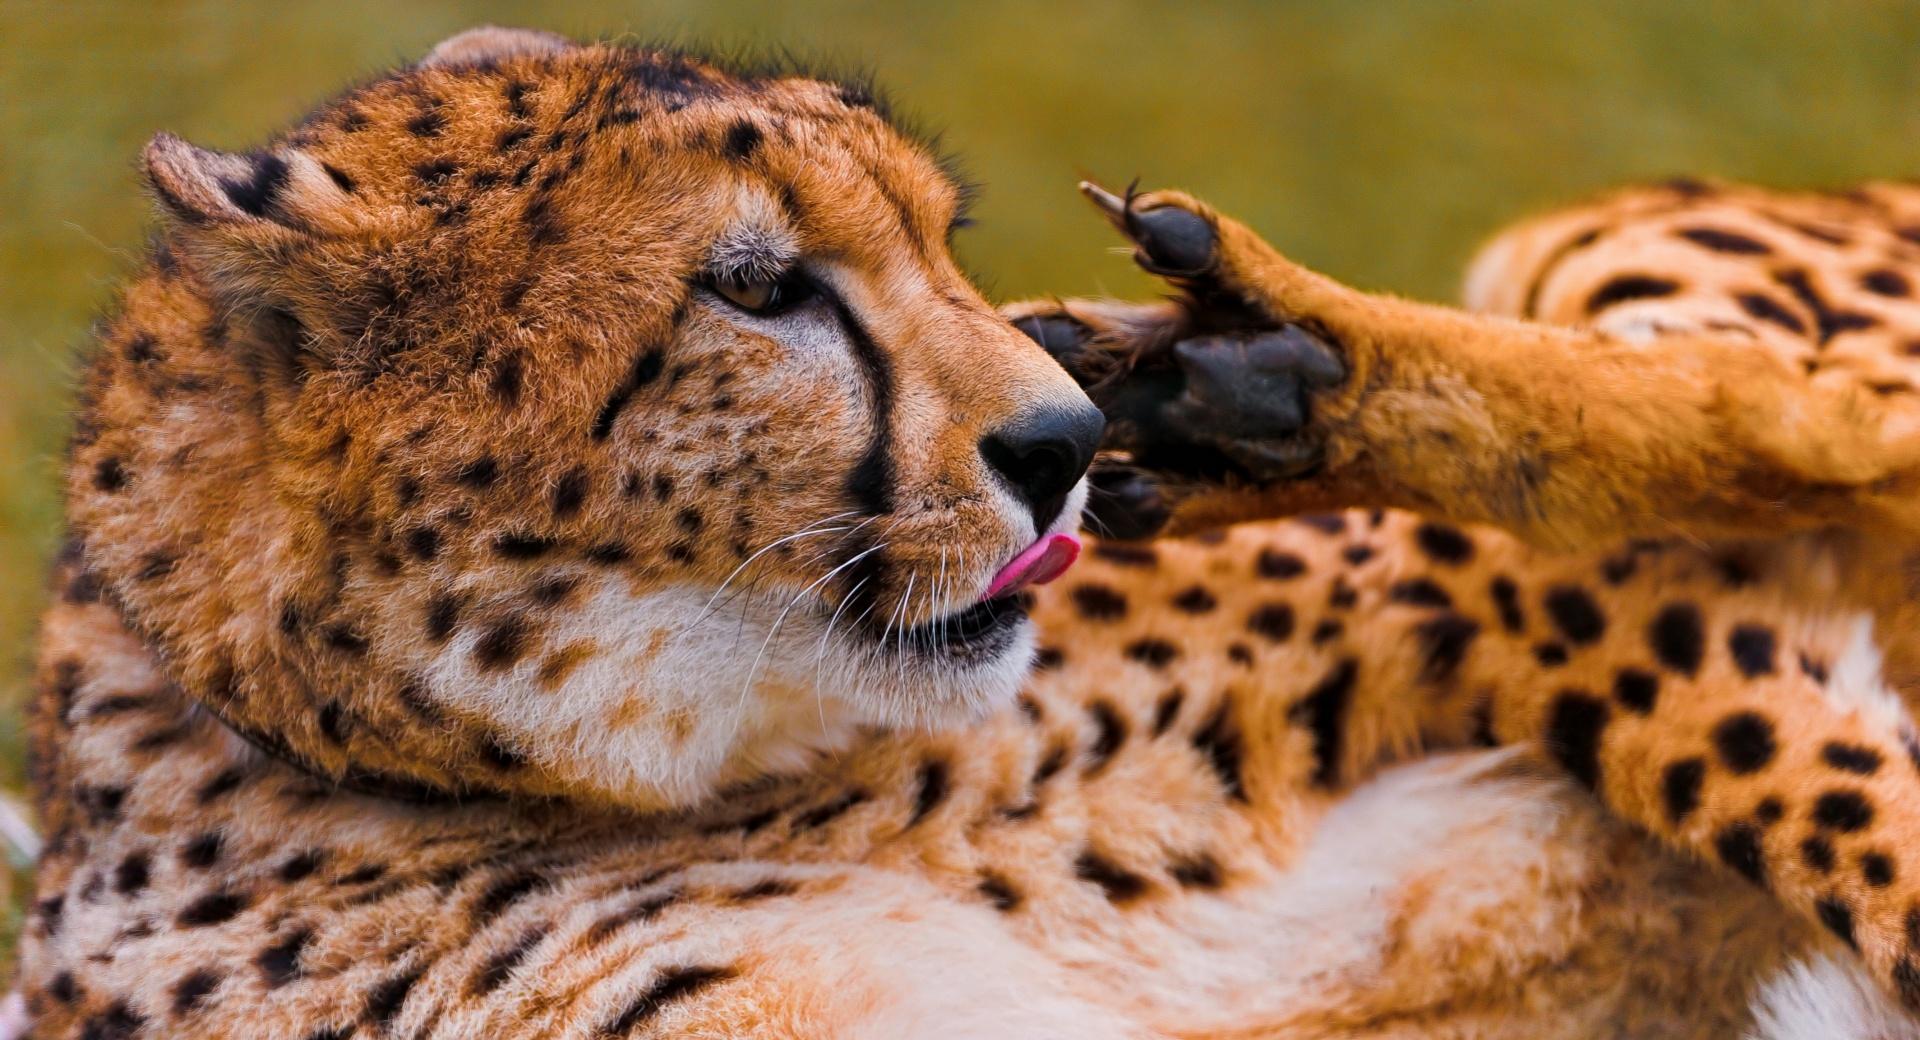 Cheetah Licking His Paw at 2048 x 2048 iPad size wallpapers HD quality